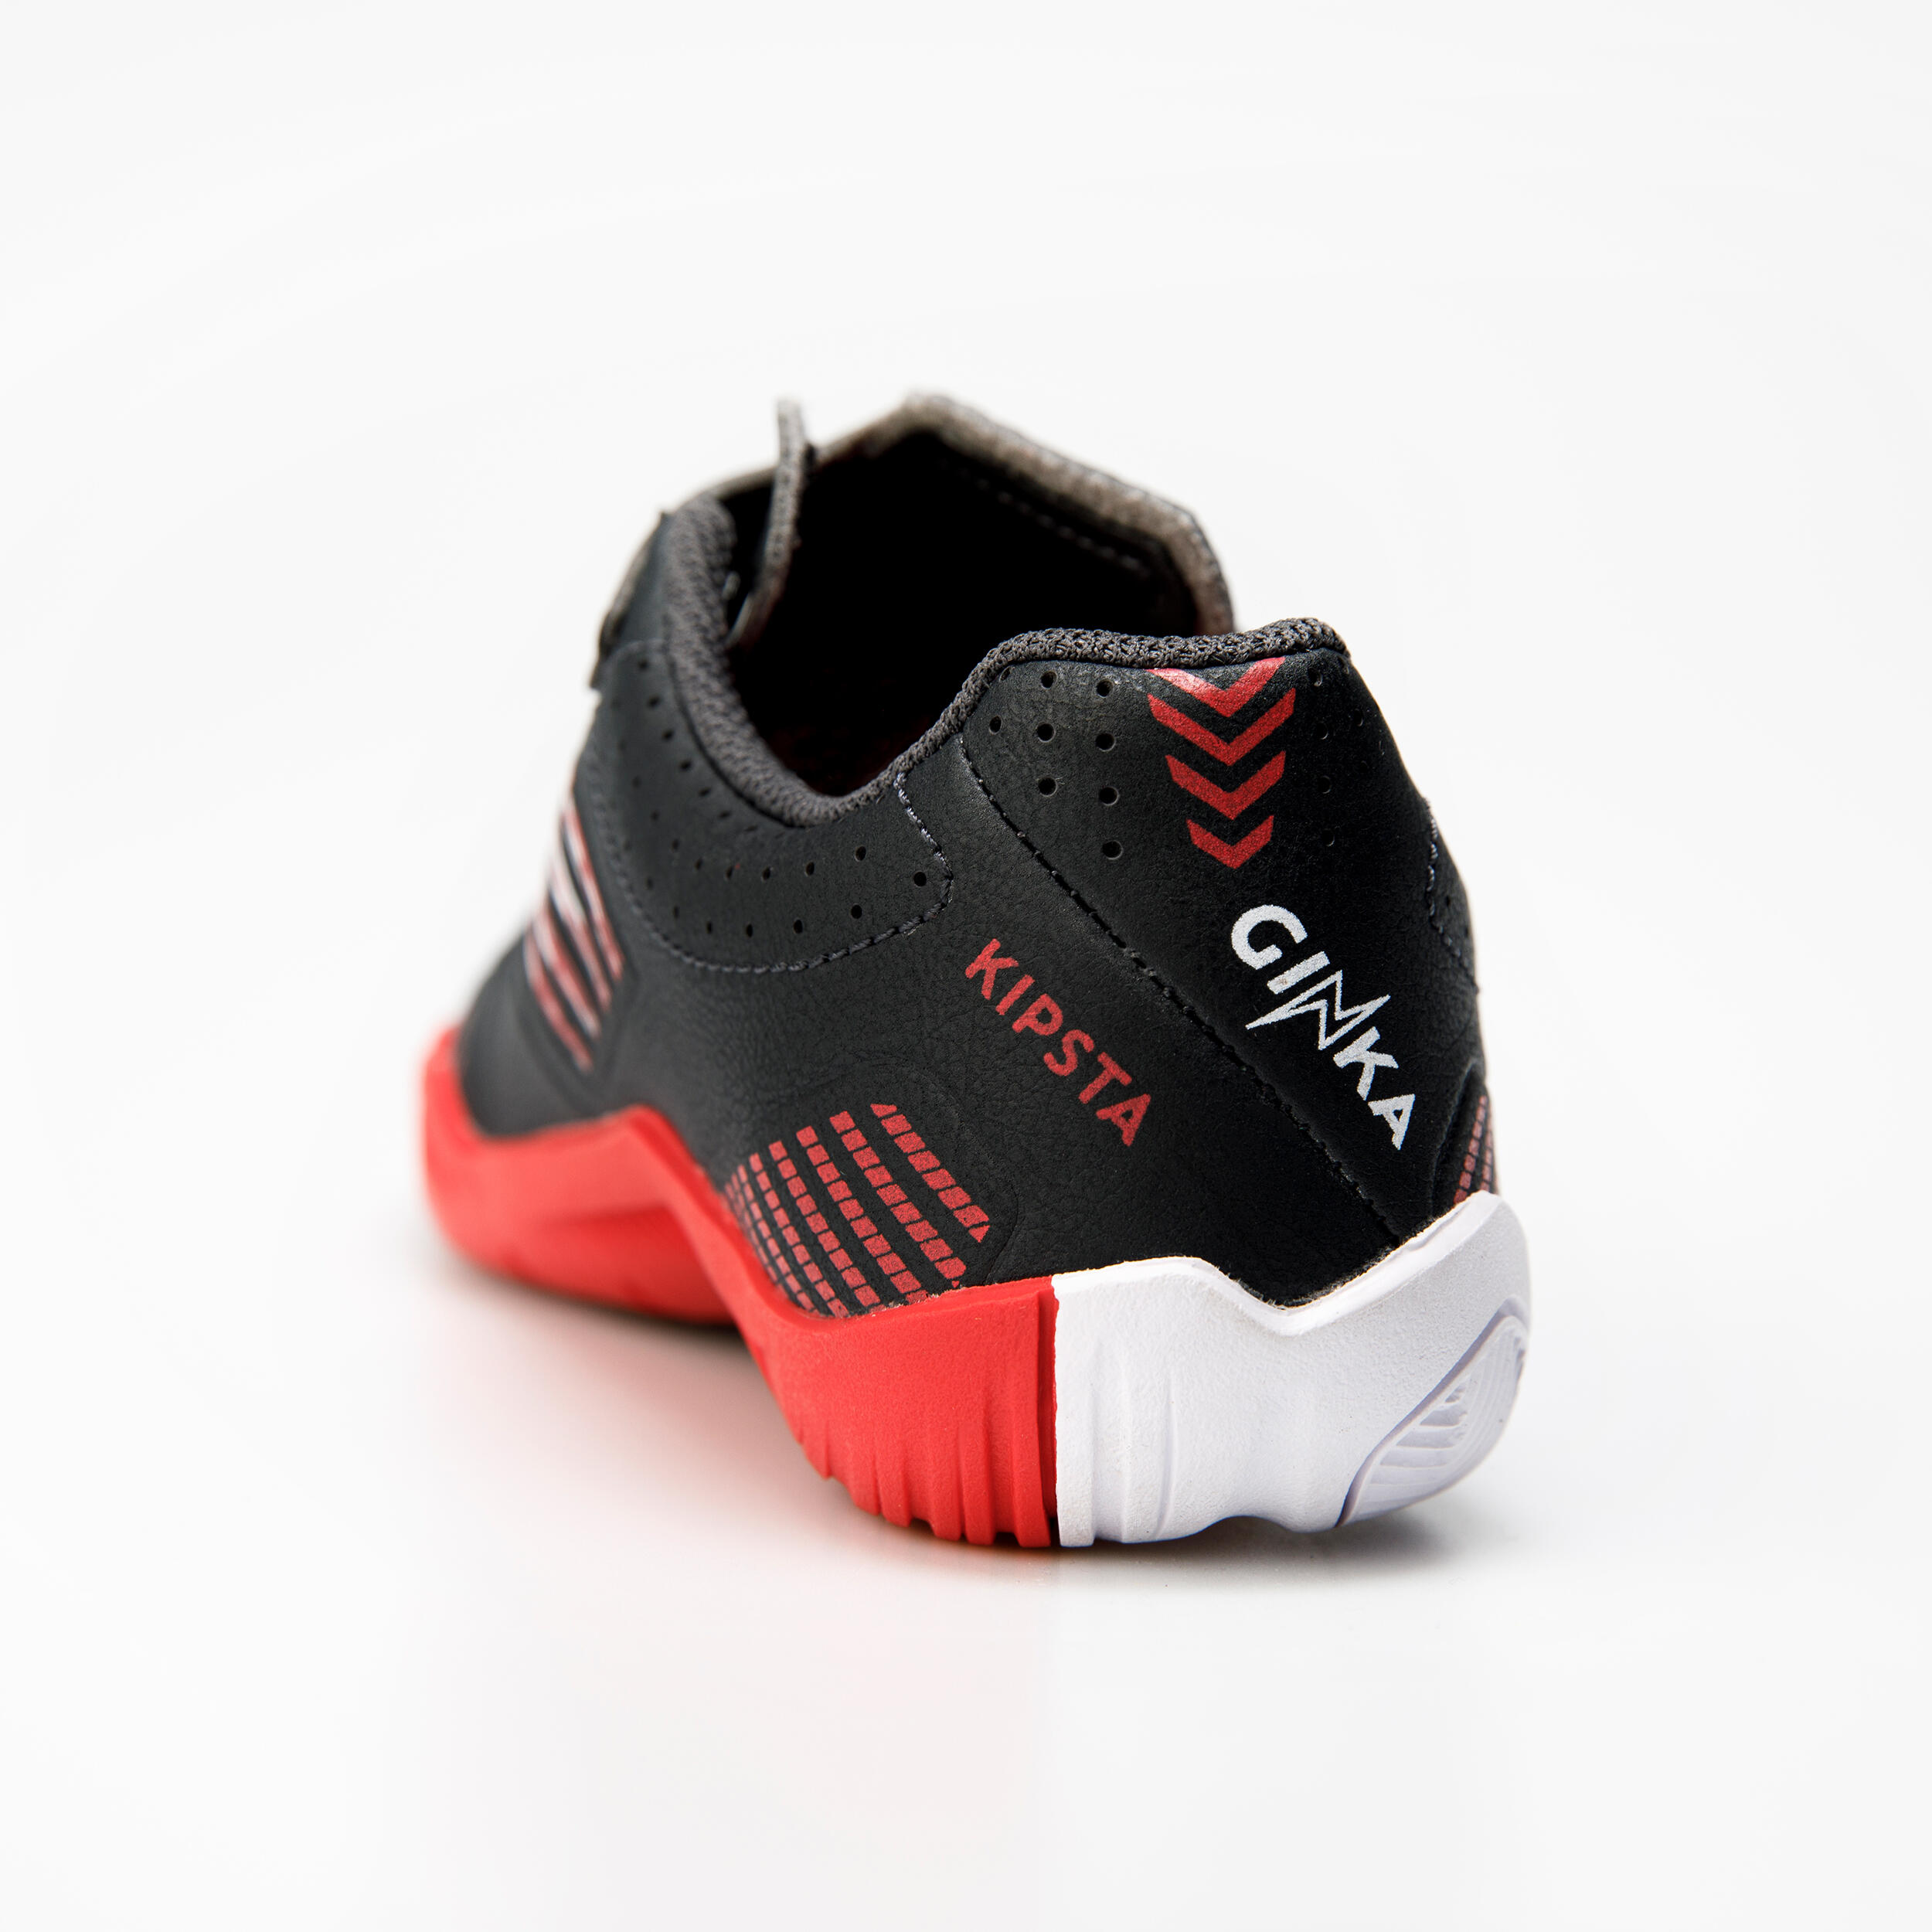 Kids' Futsal Shoes Ginka 500 - Black/Red 11/14